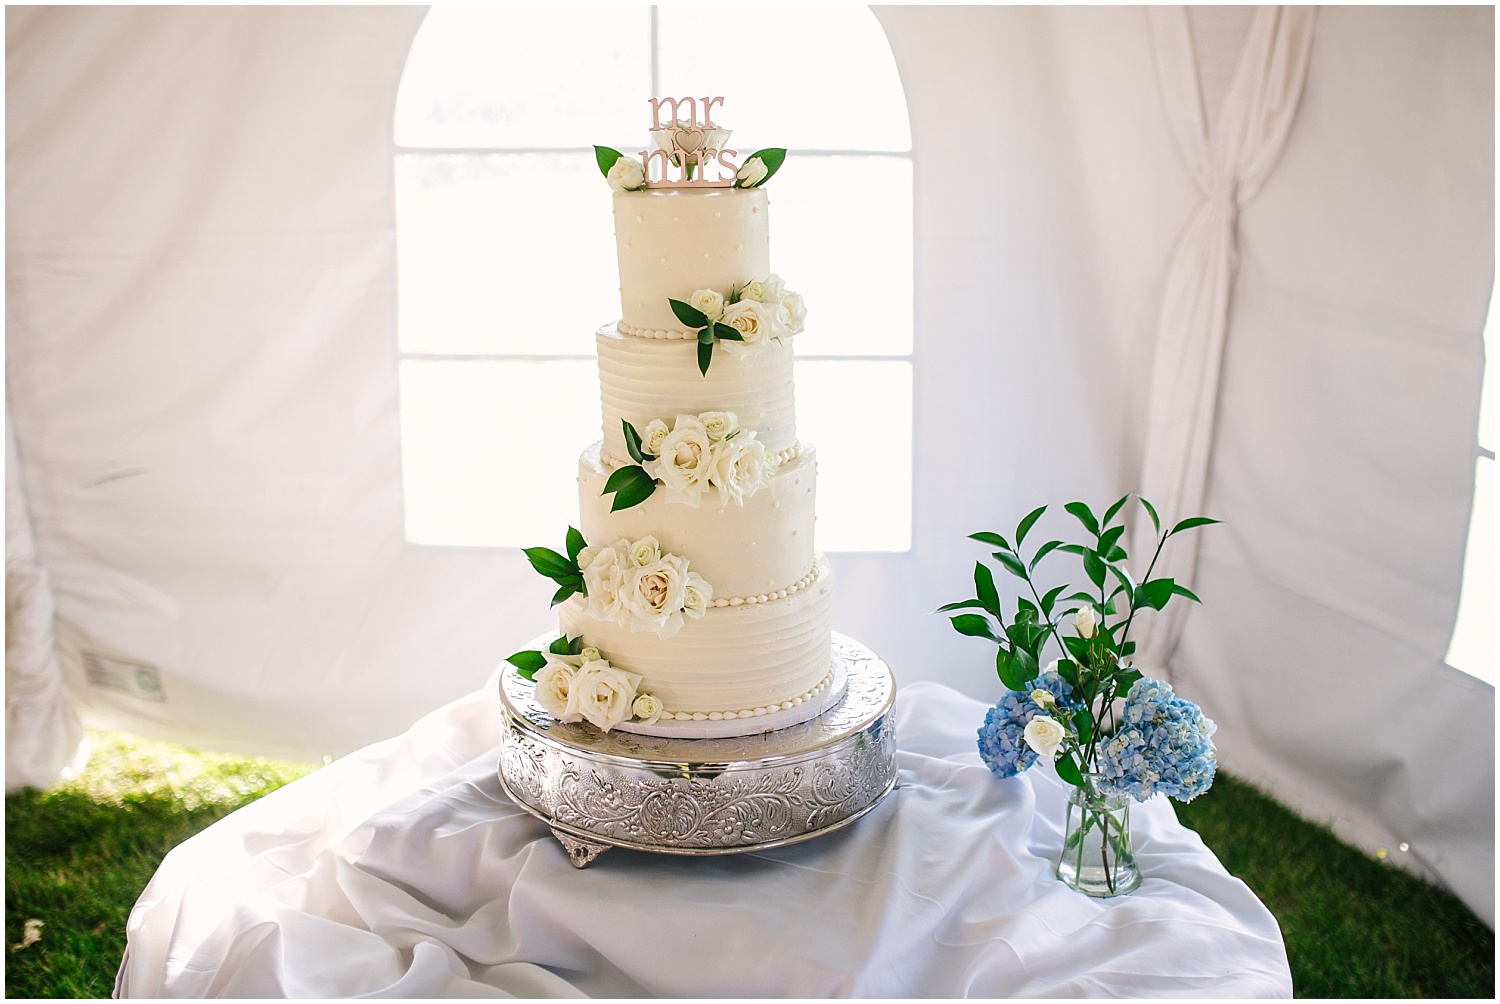 Four-tier wedding cake by Bizzy B Cakes for fall wedding at Prairie Star Restaurant